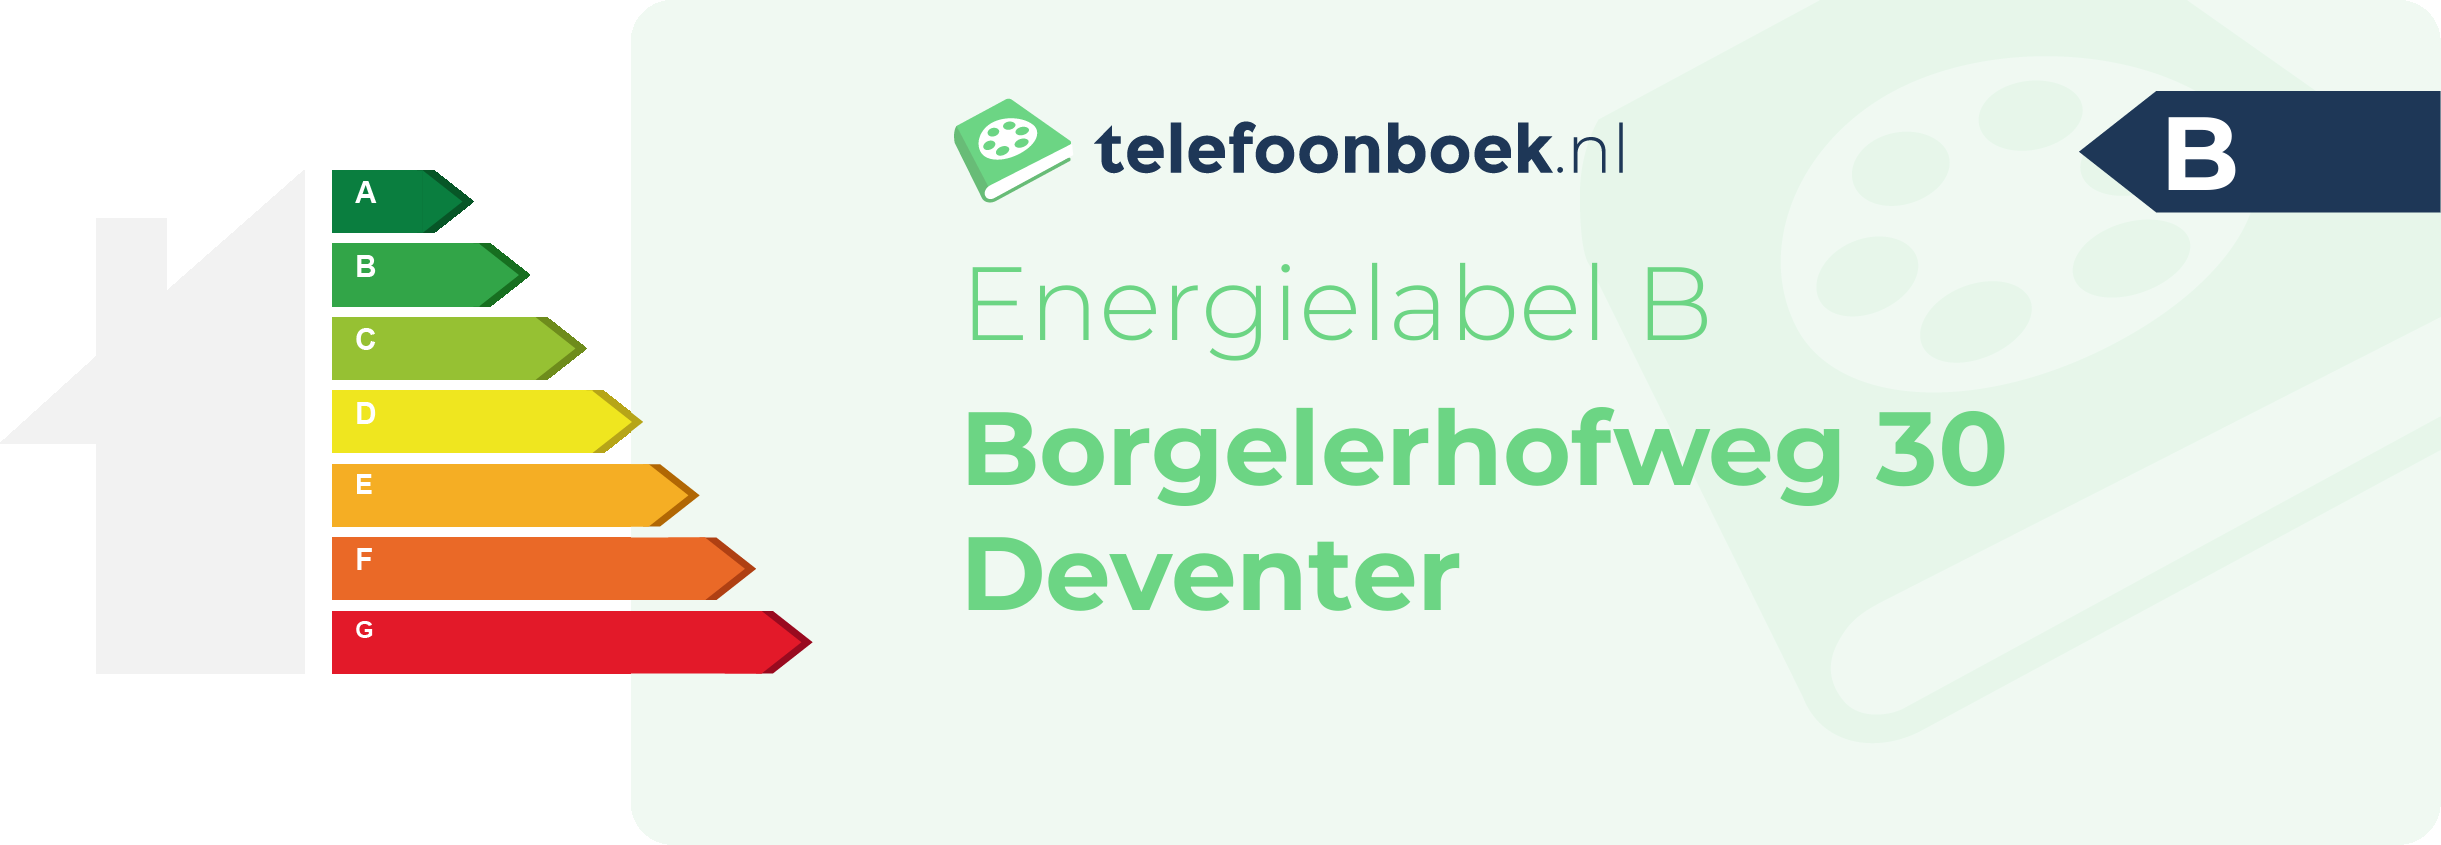 Energielabel Borgelerhofweg 30 Deventer